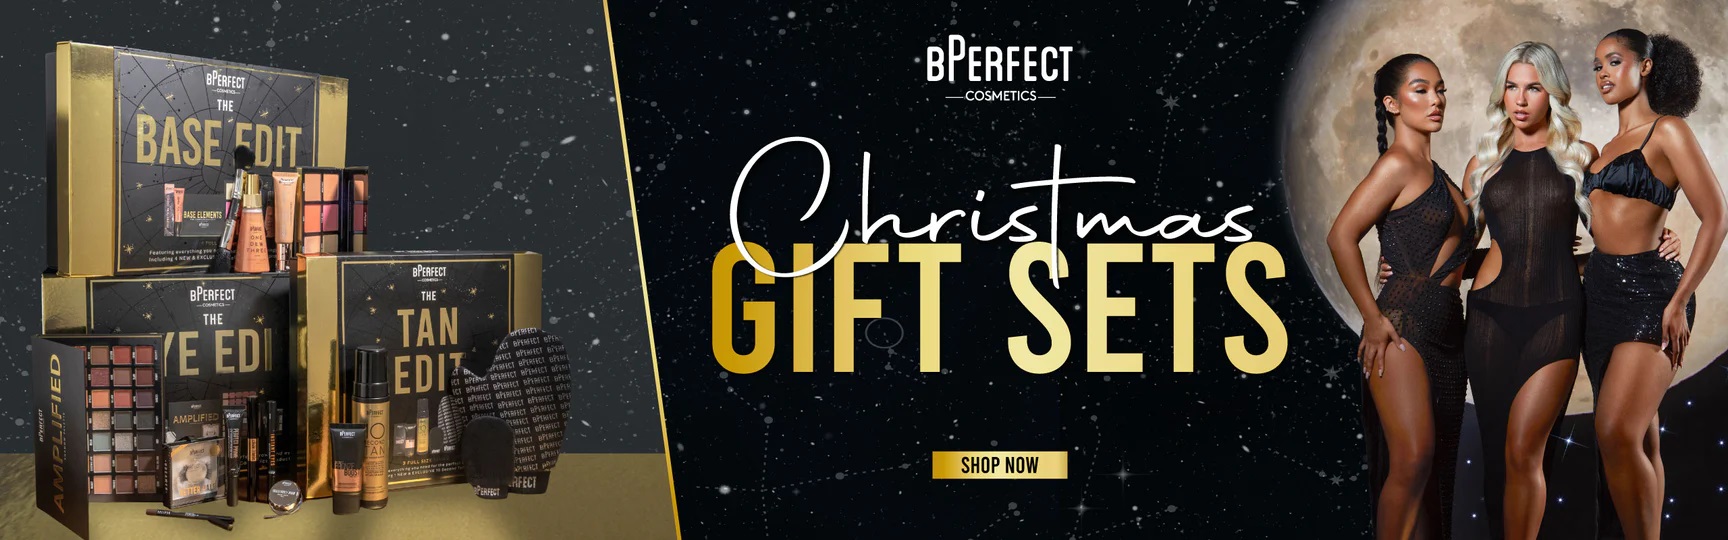 BPerfect Gift Set